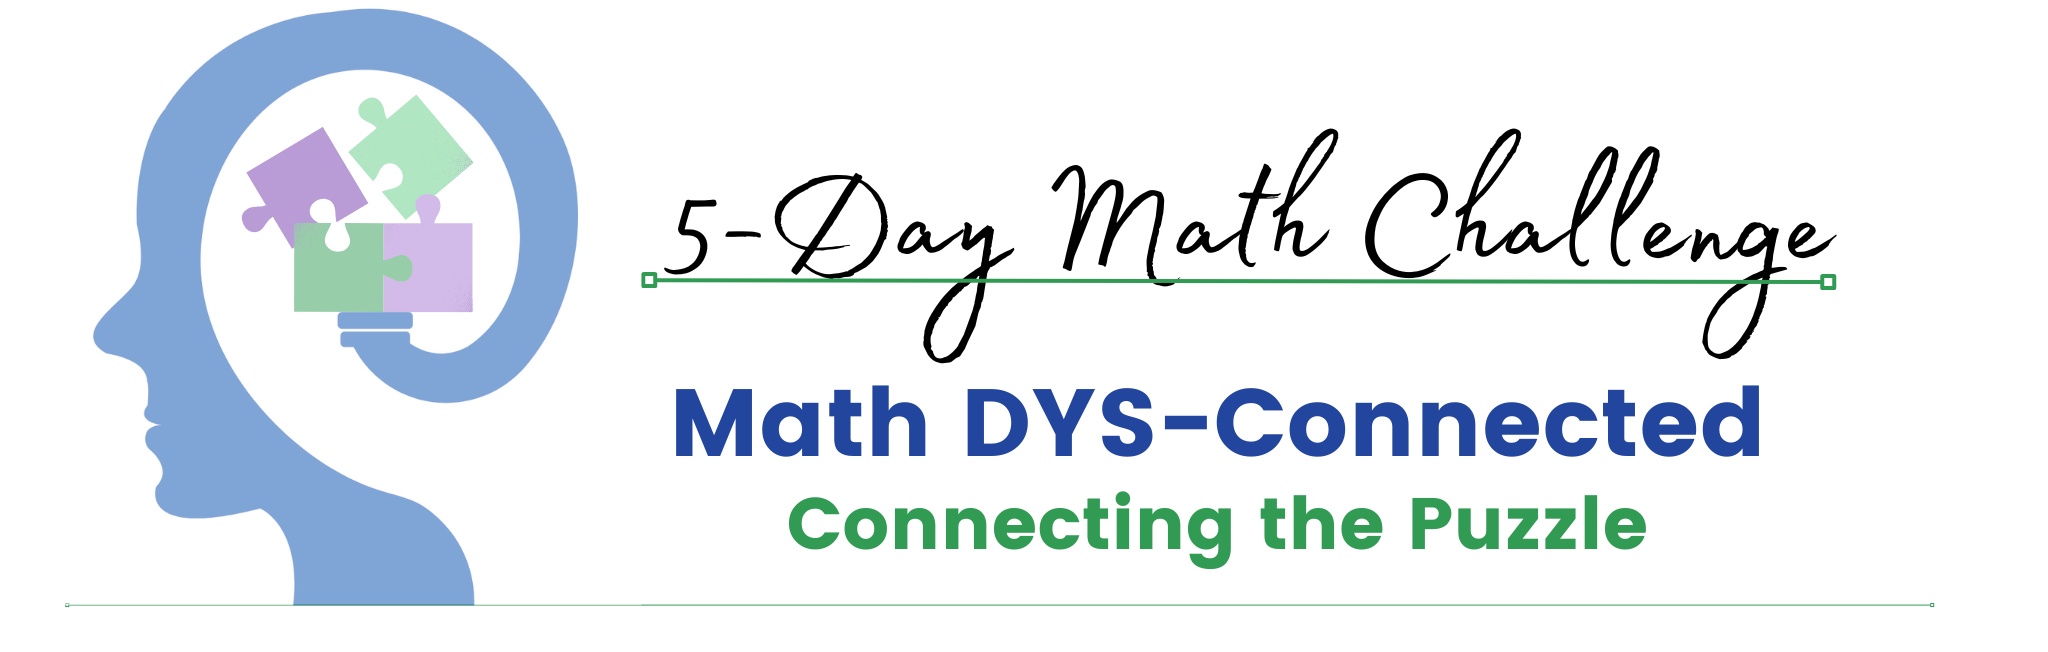 5 day math challenge logo